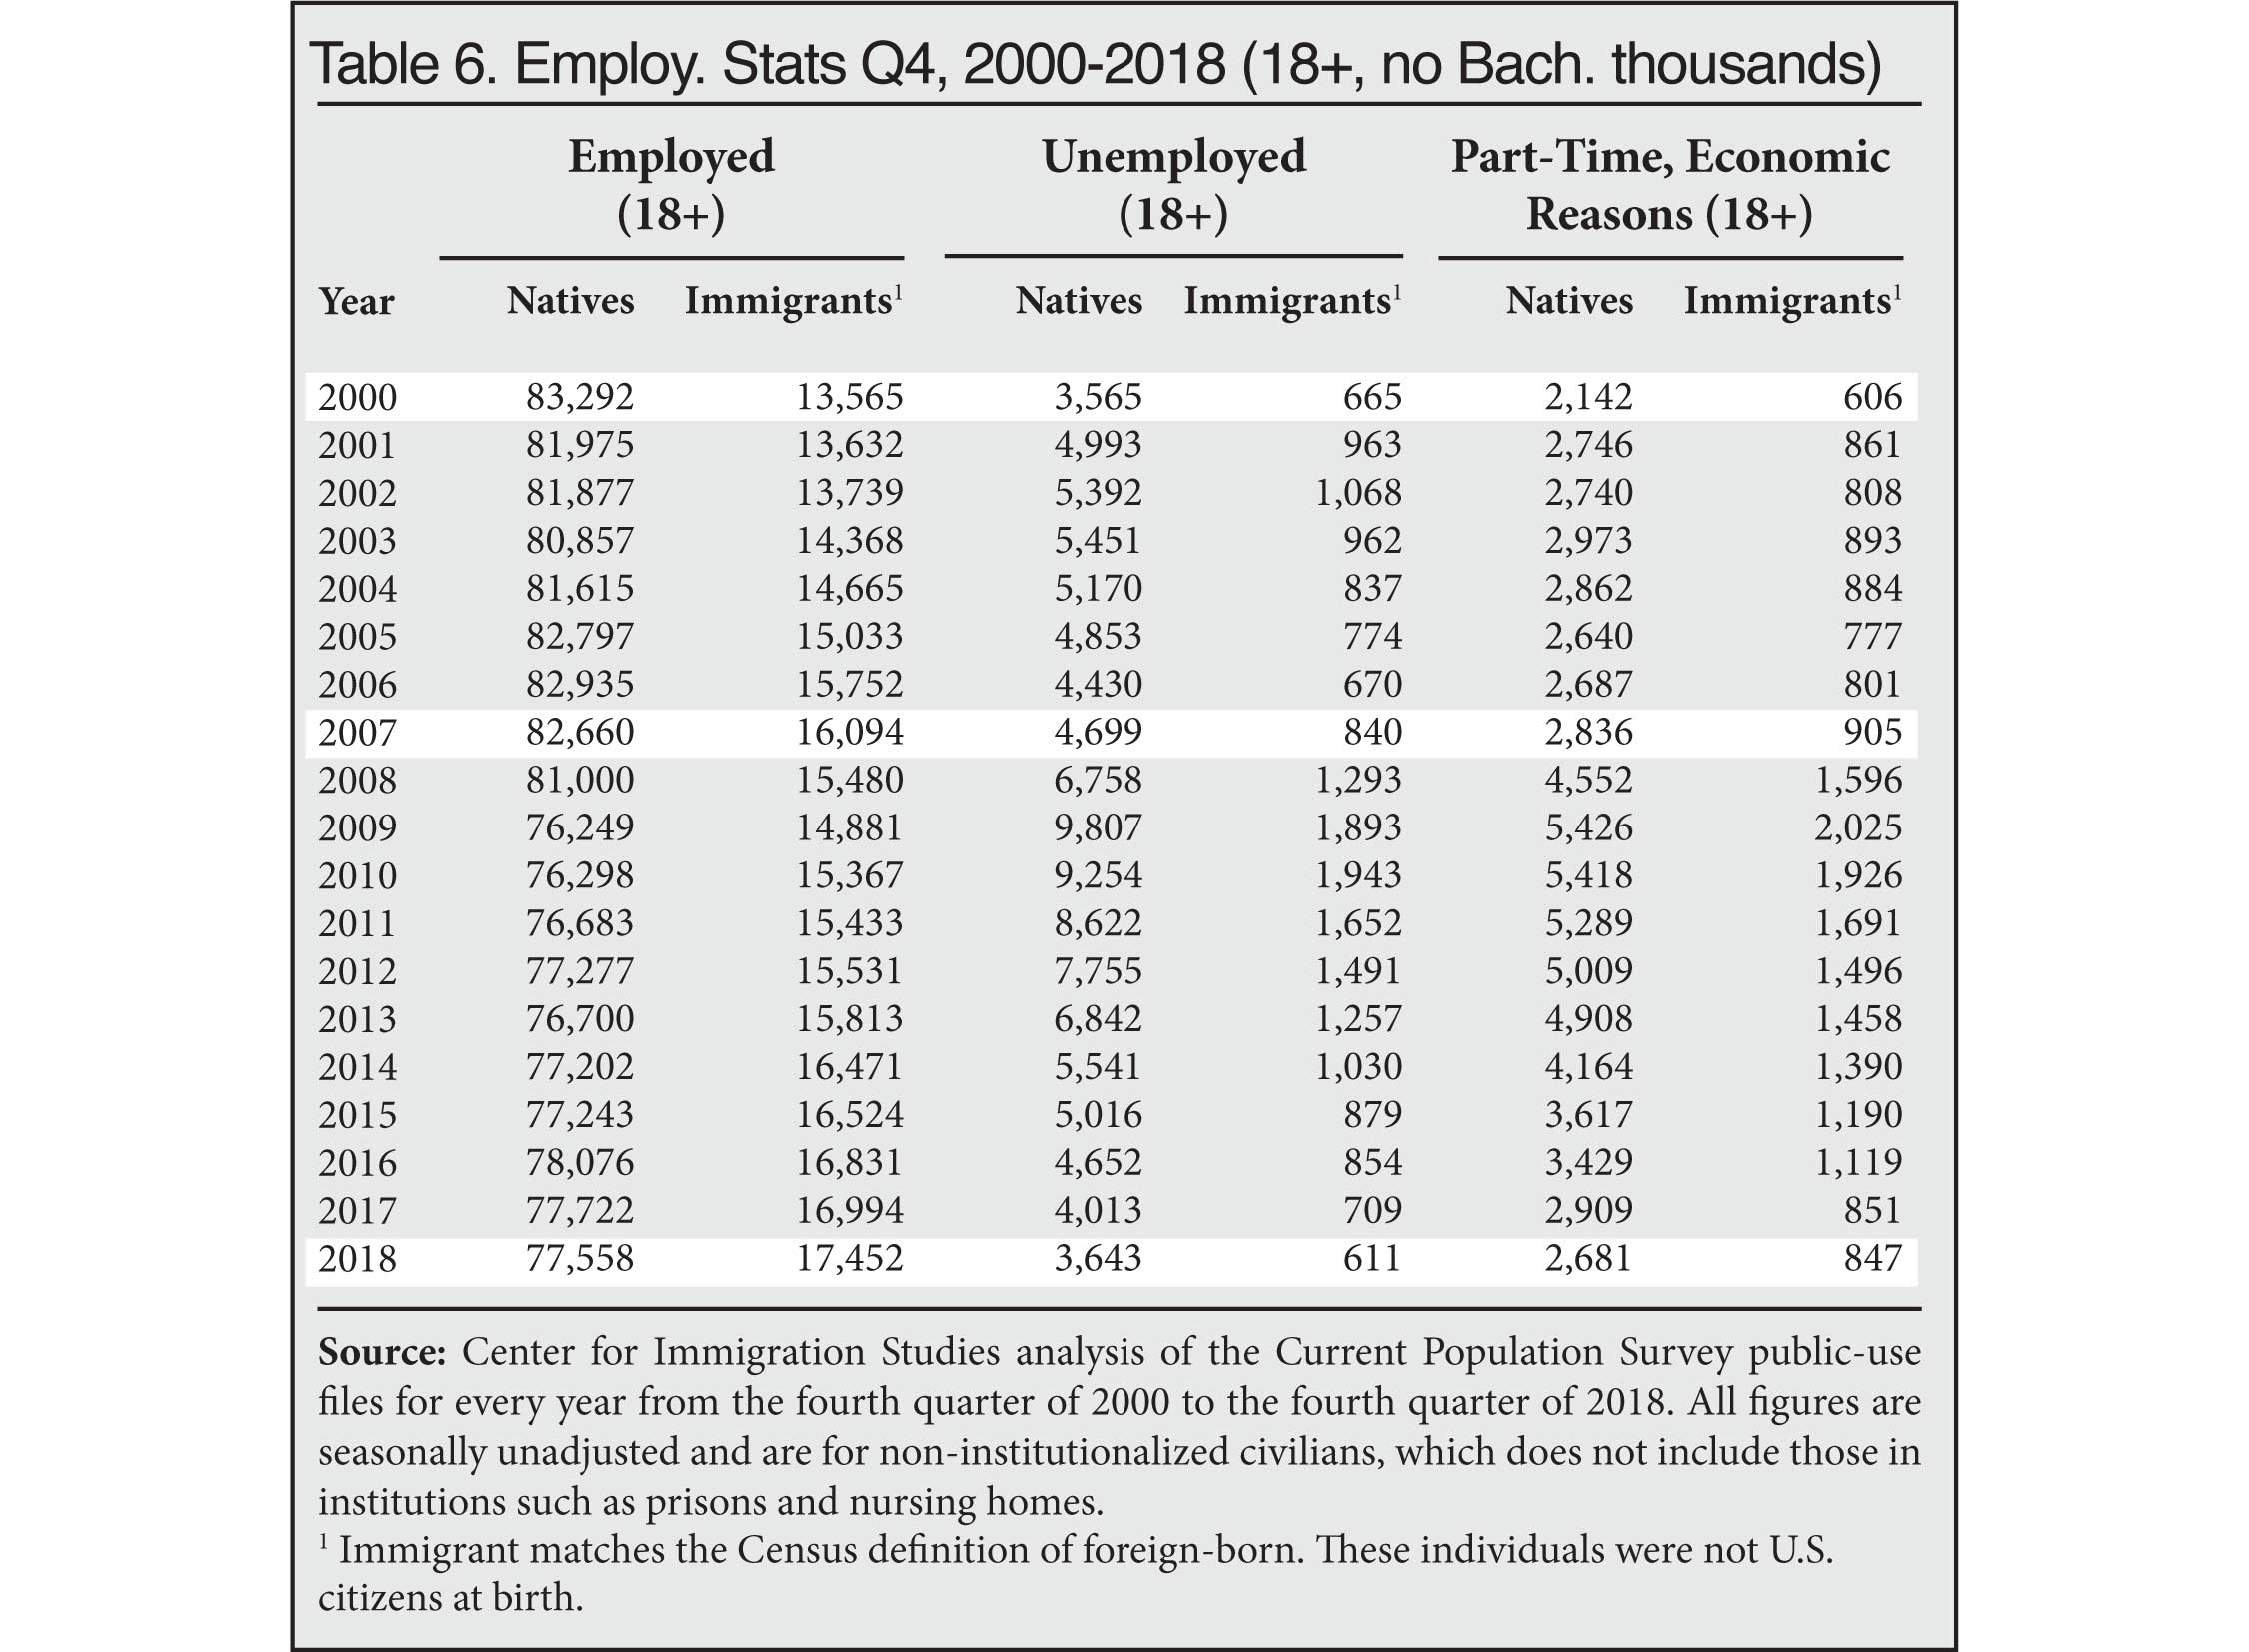 Table: Employment Statistics Q4, 2000-2018 (18+, no Bachelors)